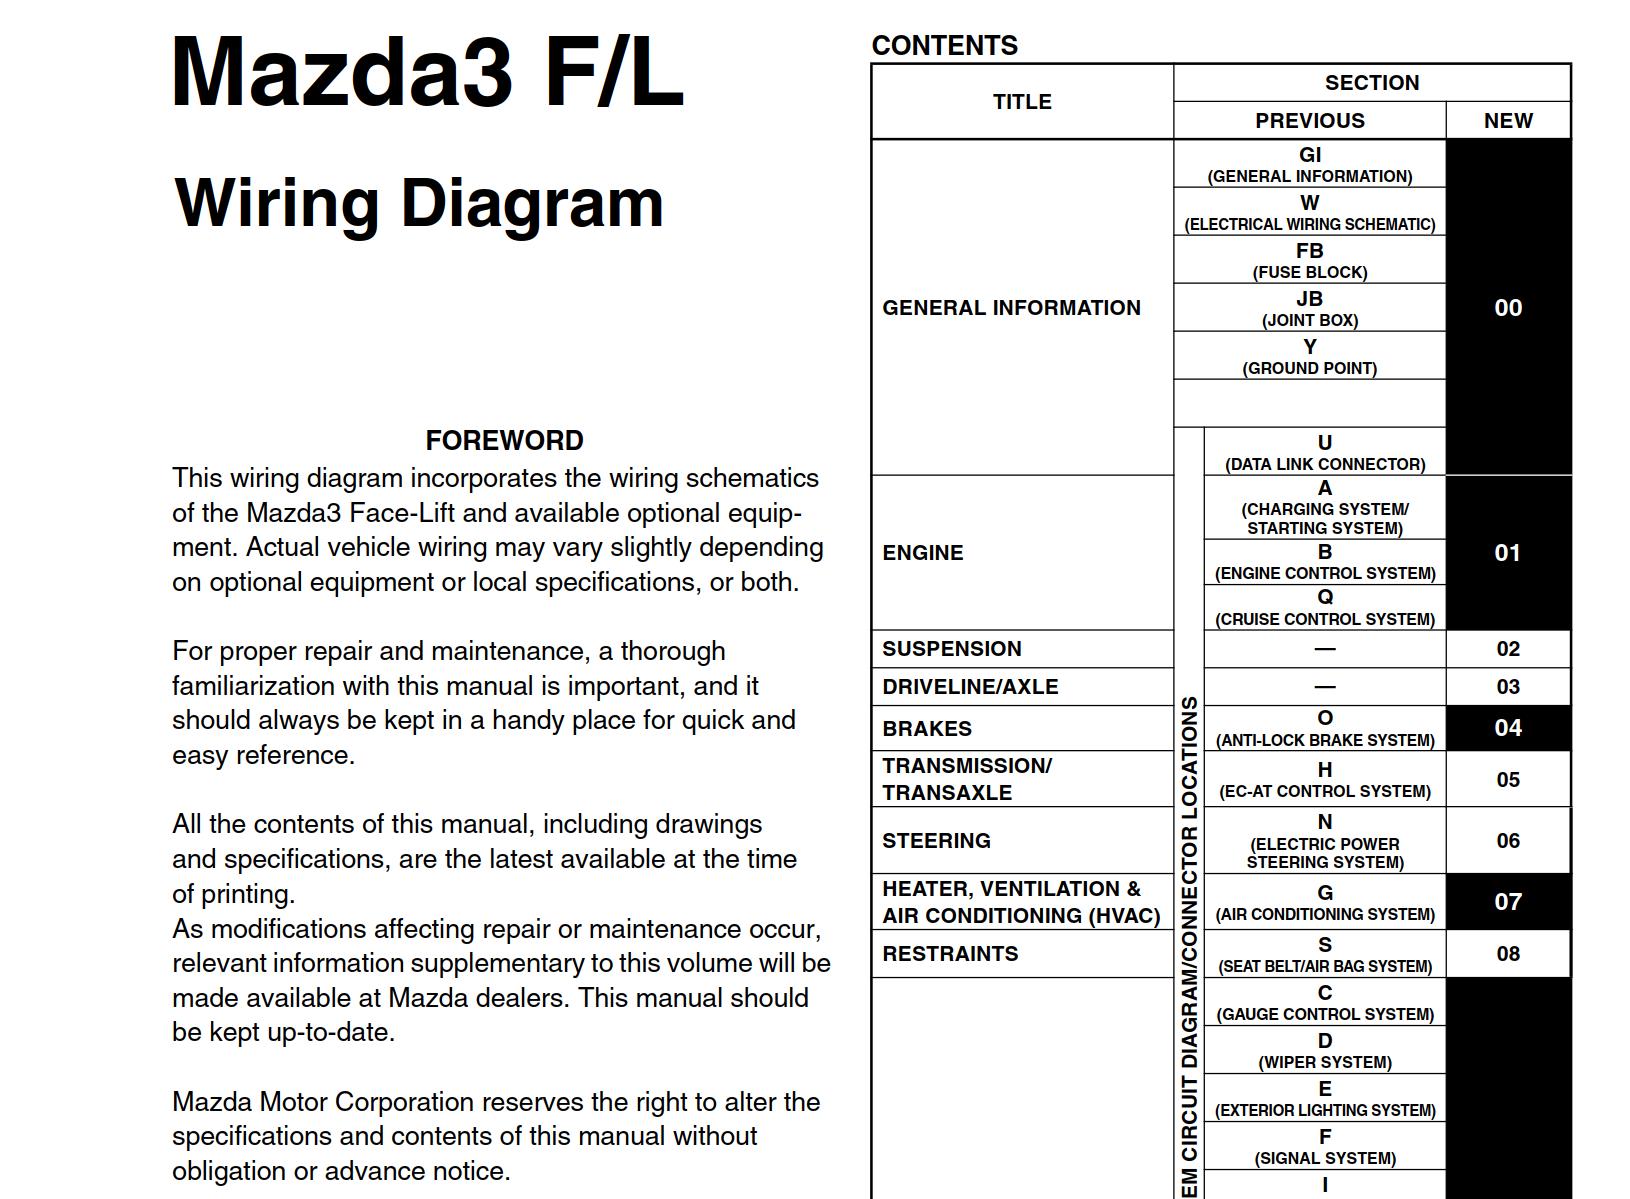 Mazda 3 Fl 2006 Wiring Diagram Pdf, Mazda 3 Wiring Diagram